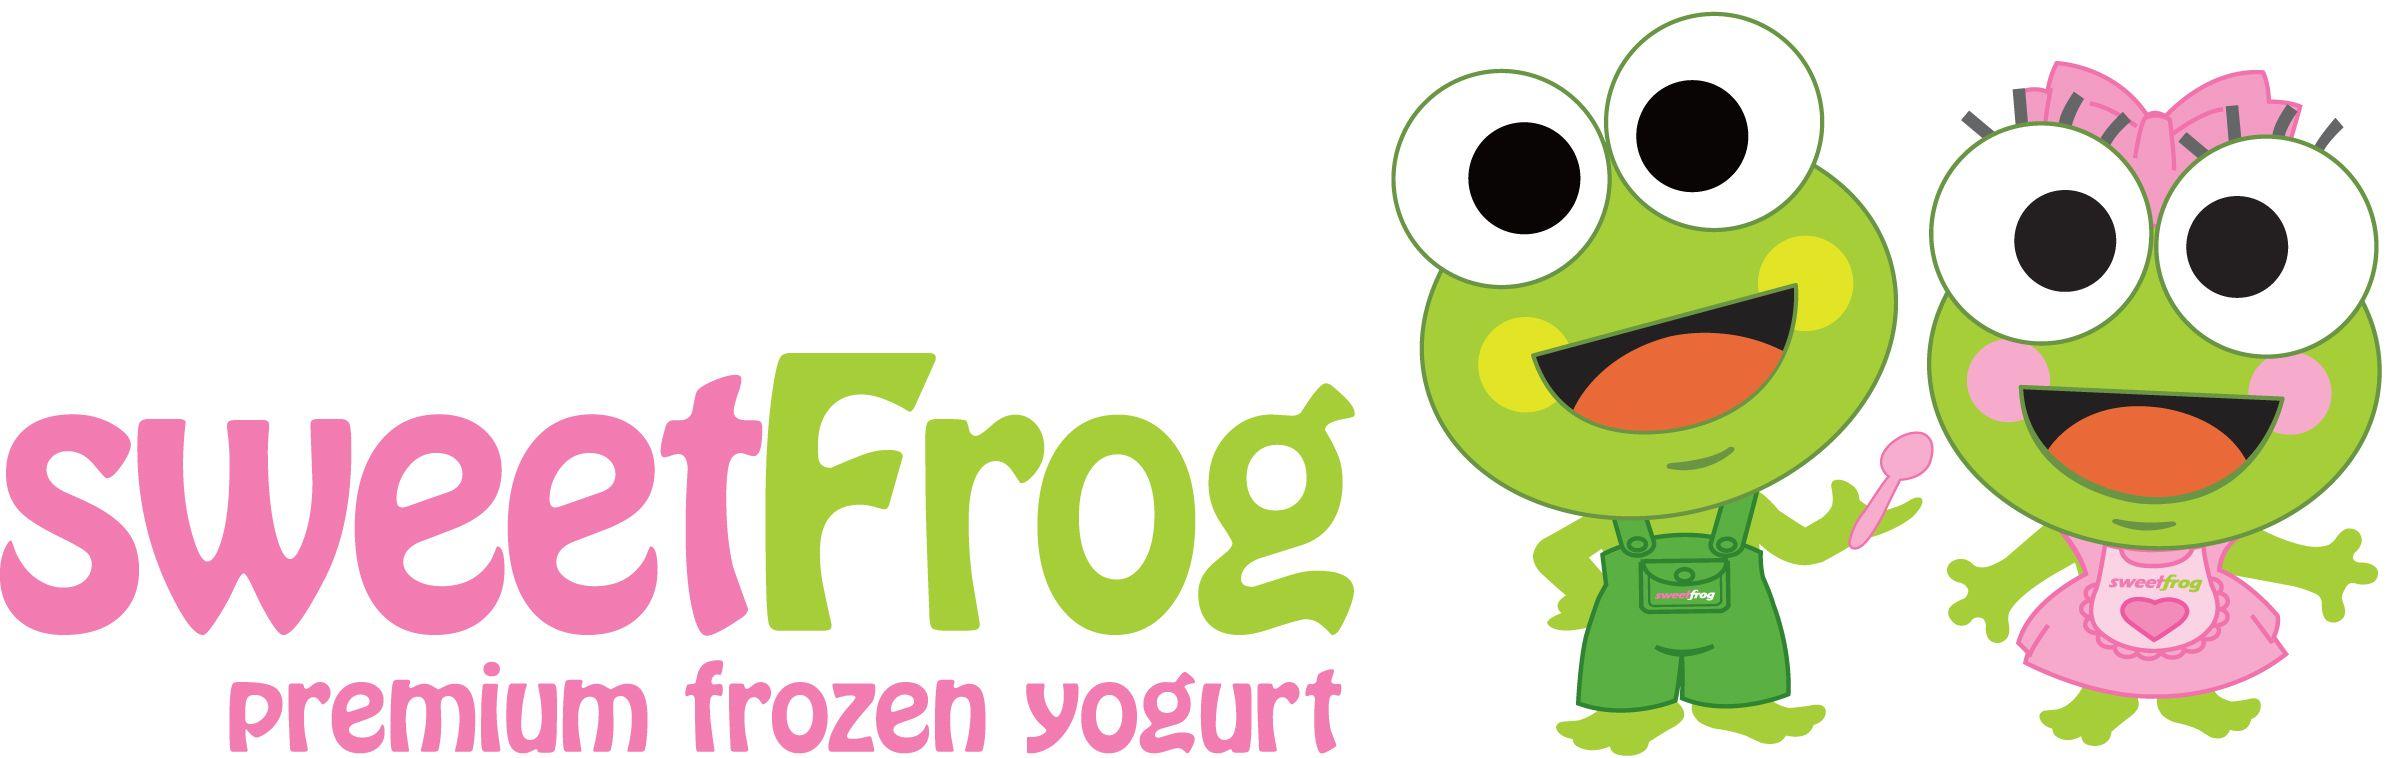 Famous Frog Logo - Sweet frog Logos